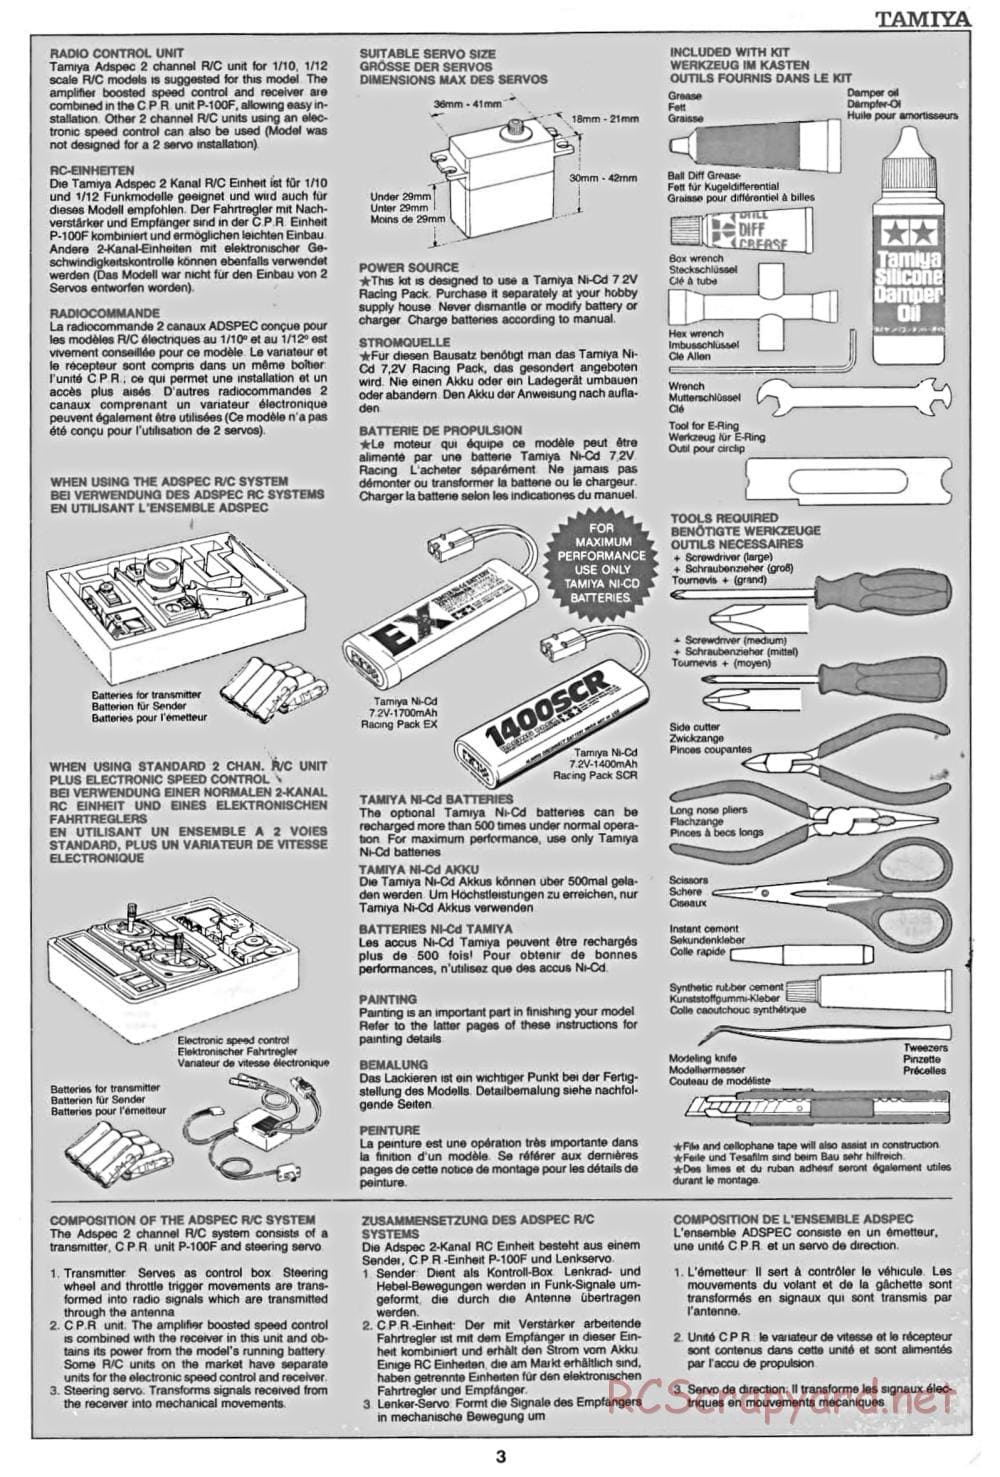 Tamiya - Top Force Evolution Chassis - Manual - Page 3